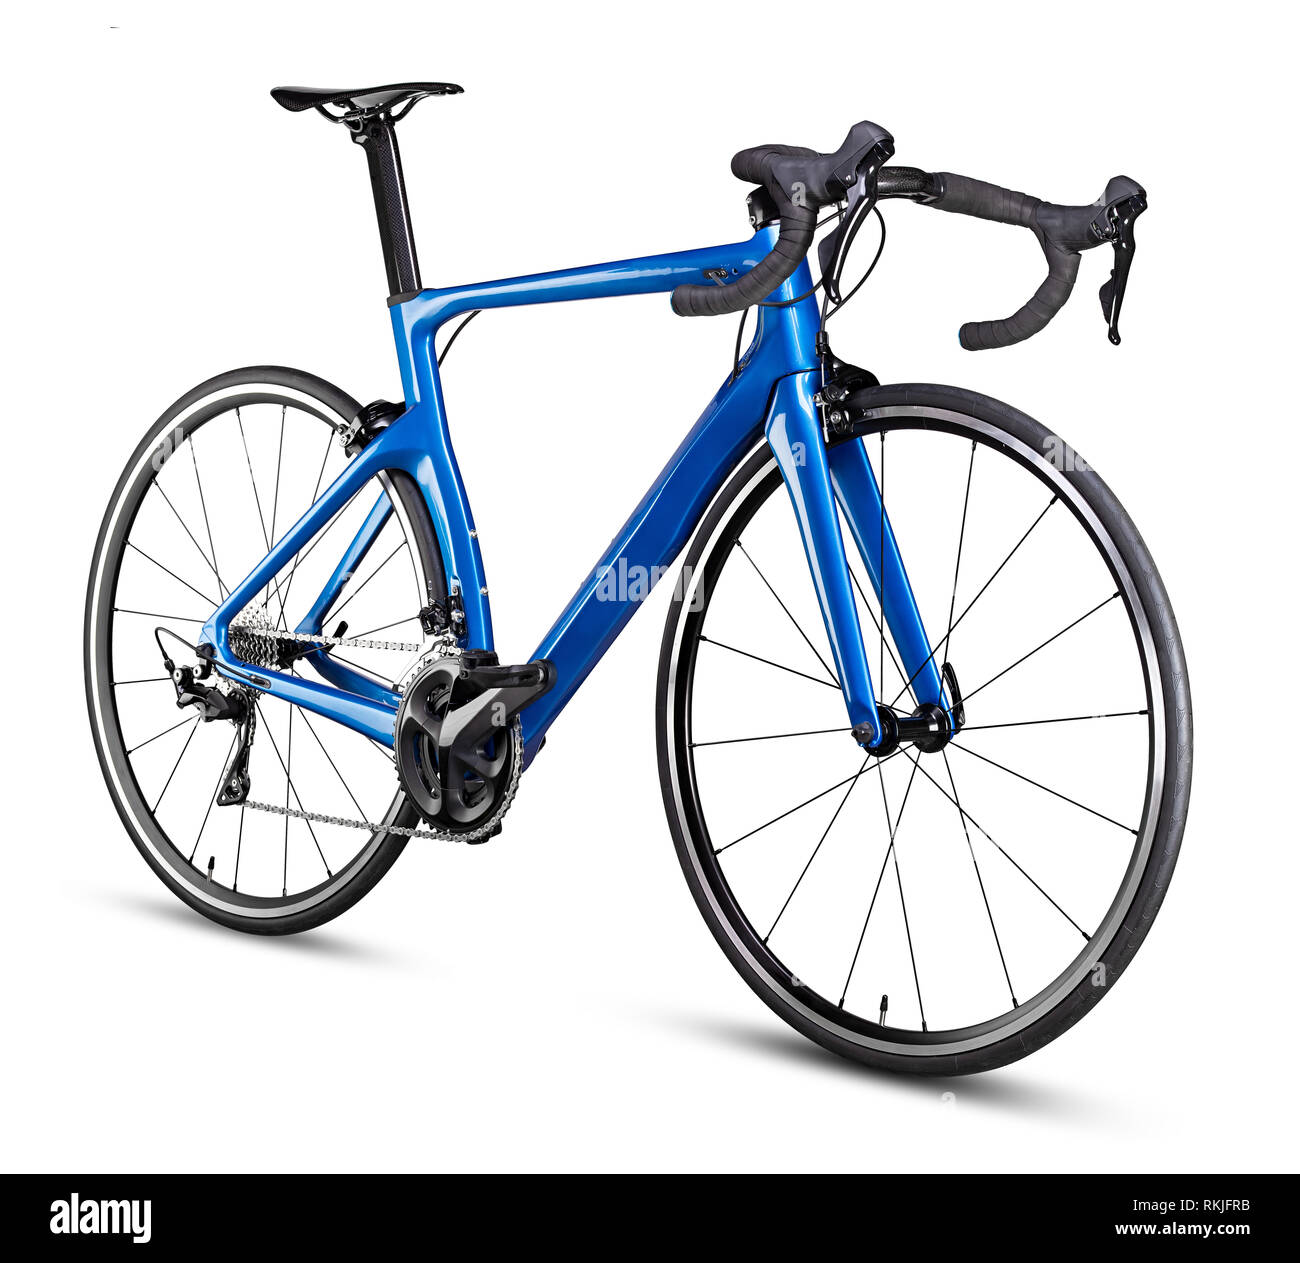 Blau Schwarz moderne aerodynmic Carbon sport Road bike Bicycle racing Racer auf weißem Hintergrund Stockfoto